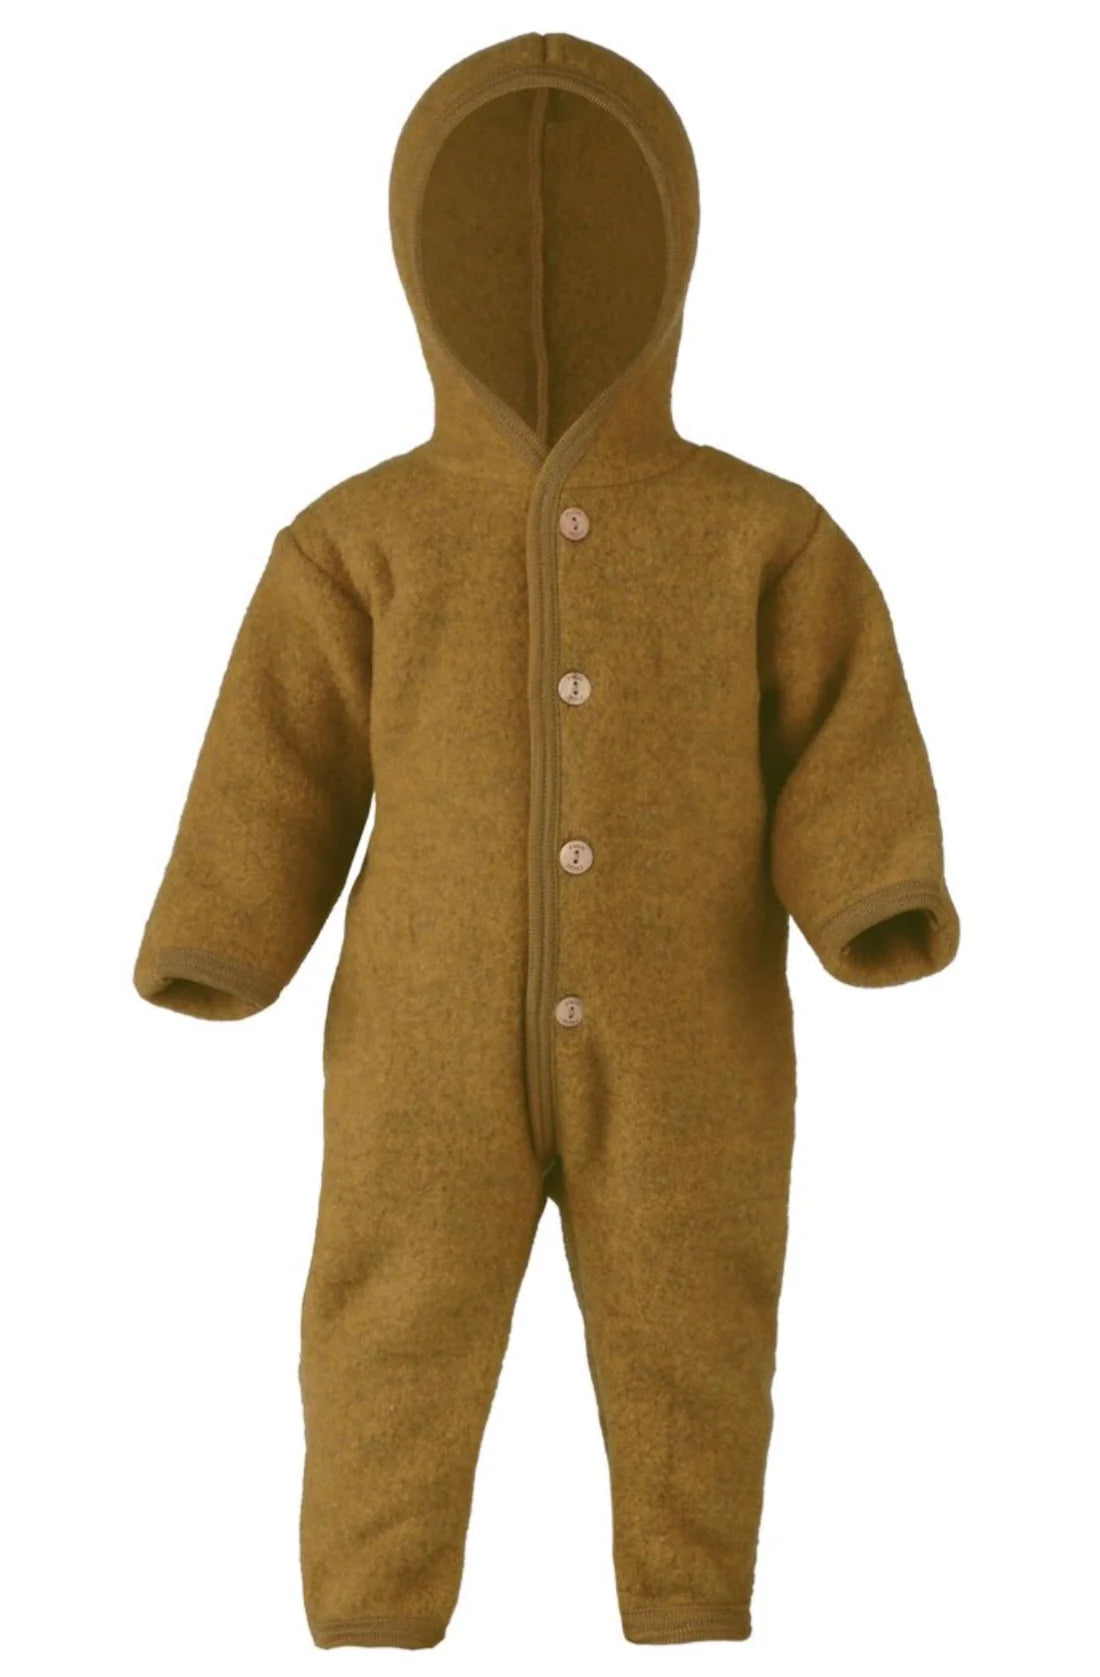 Wool Fleece Baby Overall - Saffron